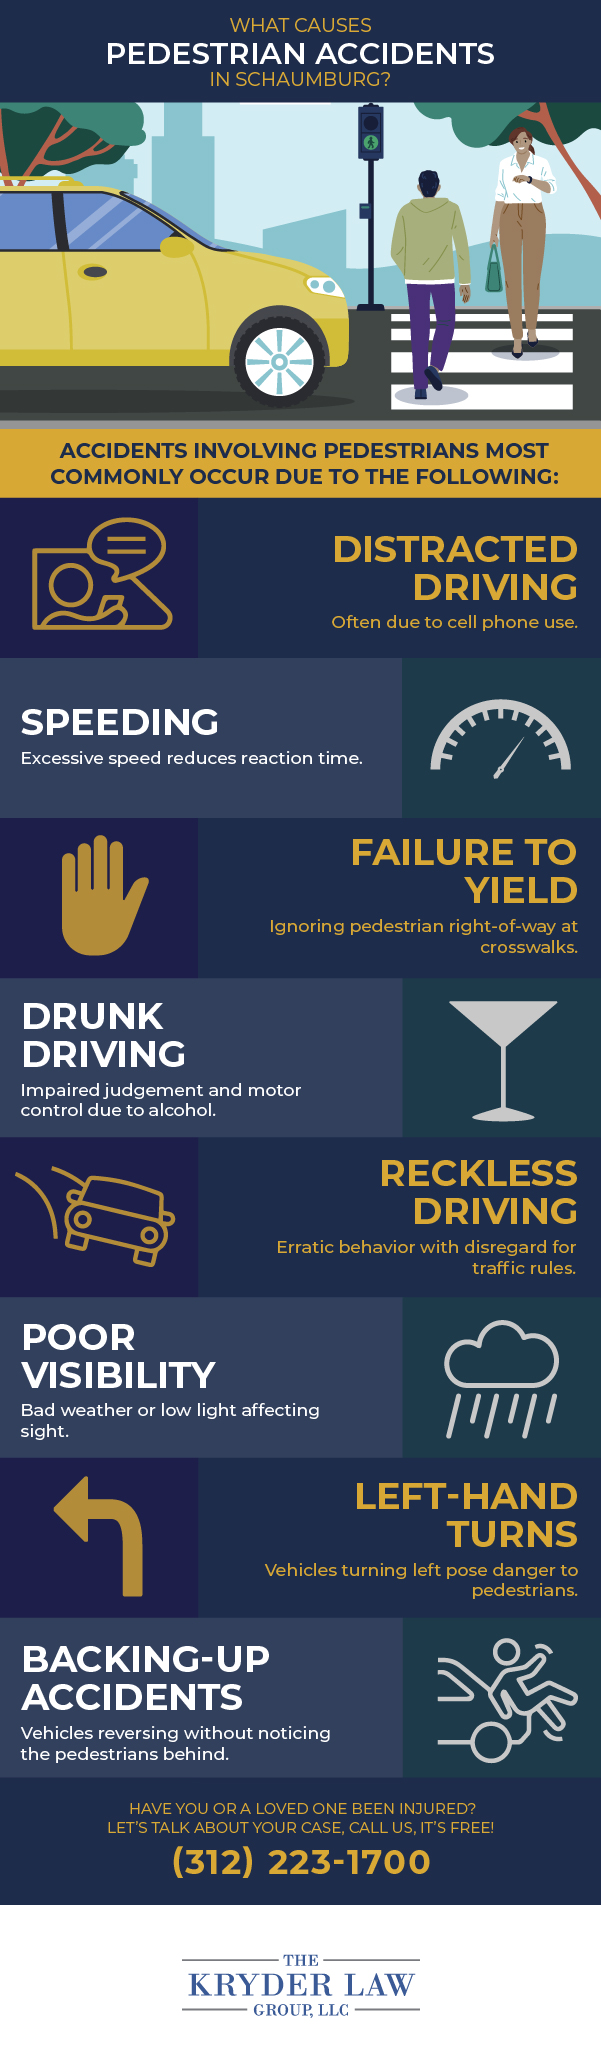 What Causes Pedestrian Accidents in Schaumburg?